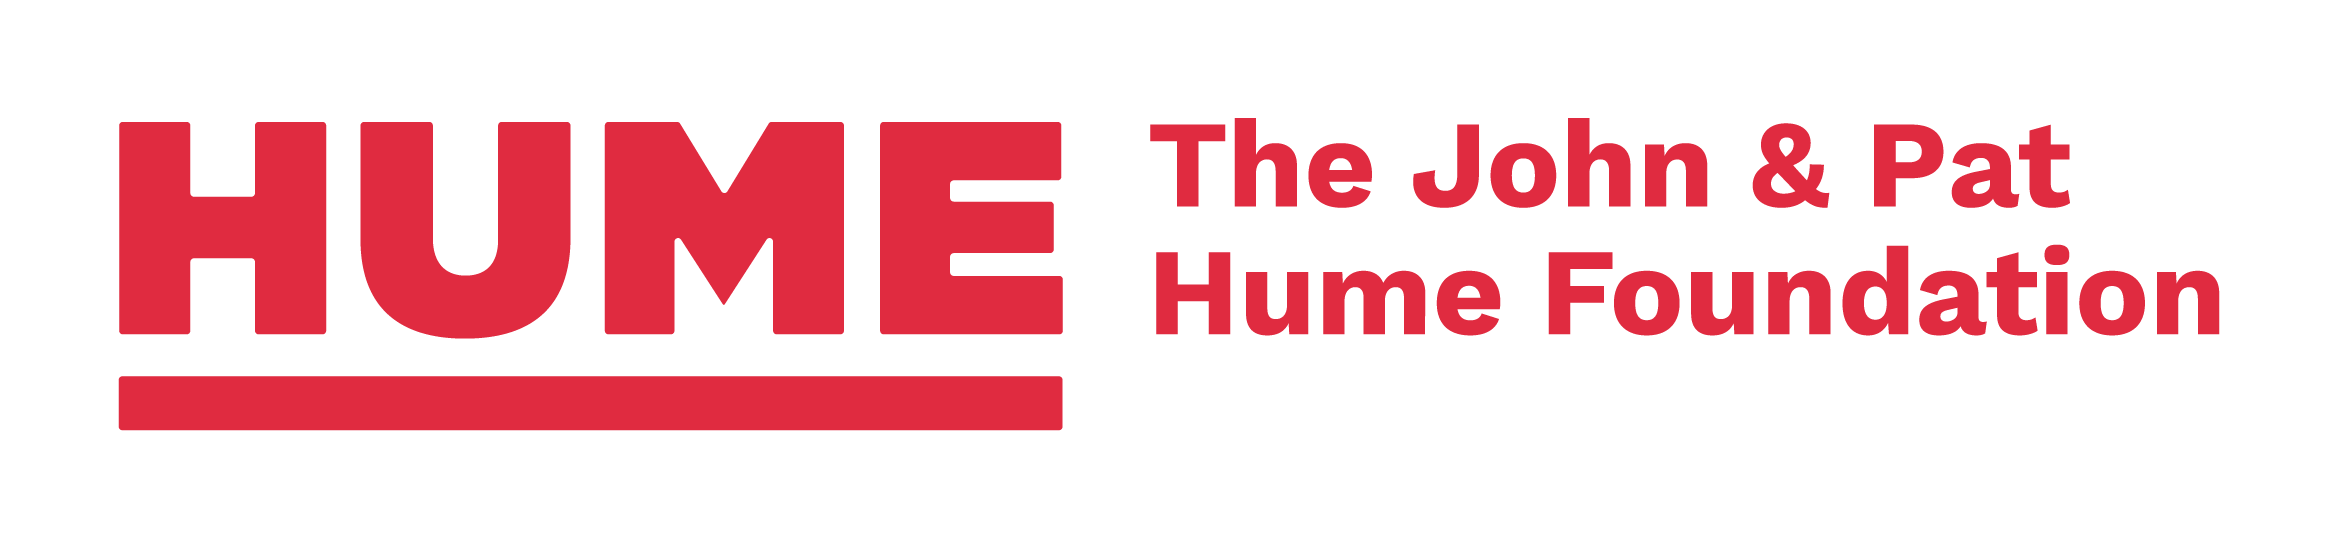 Hume The John & Pat Hume Foundation